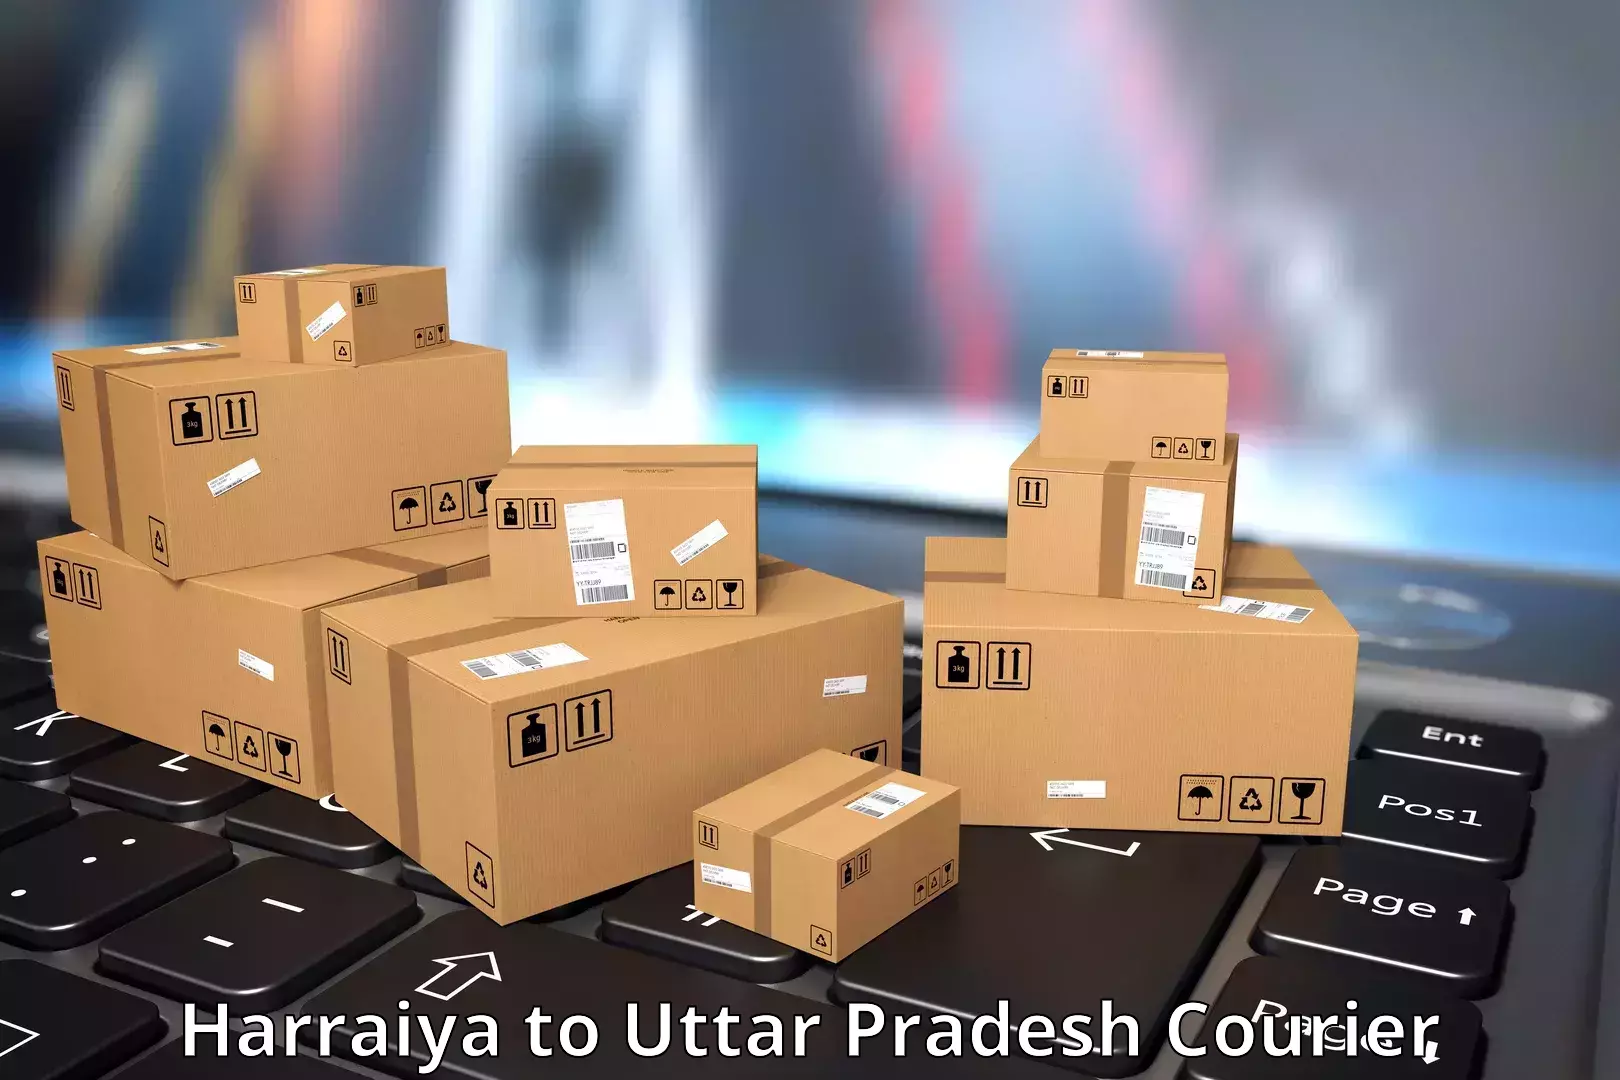 Courier service comparison Harraiya to Uttar Pradesh